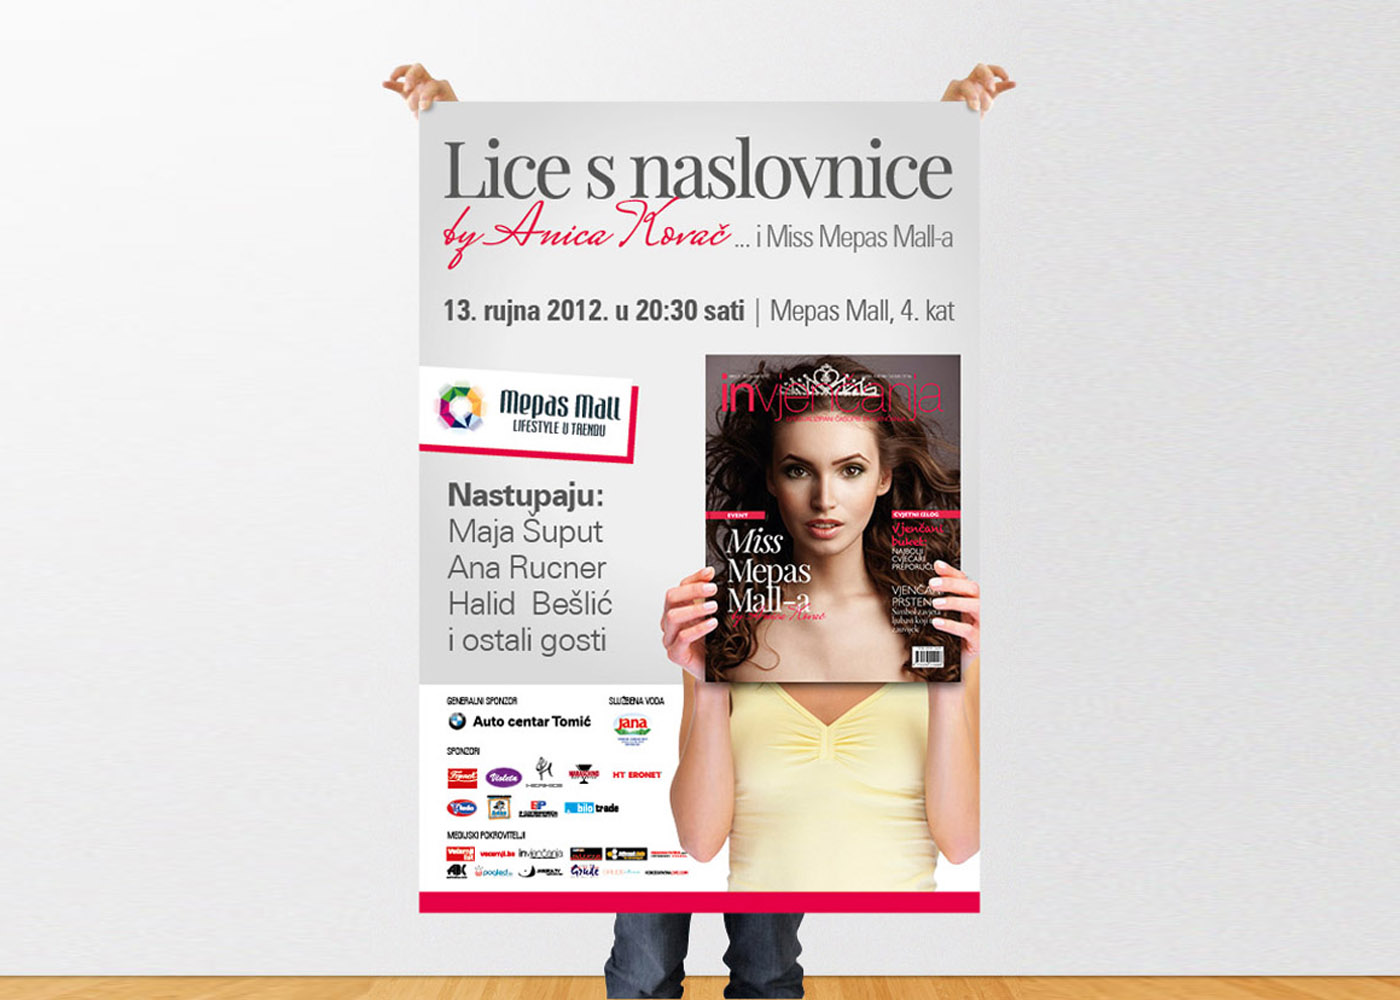 Dizajn event identiteta i promotivne kampanje za "Lice s naslovnice i Miss Mepas Mall-a by Anica Kovač"